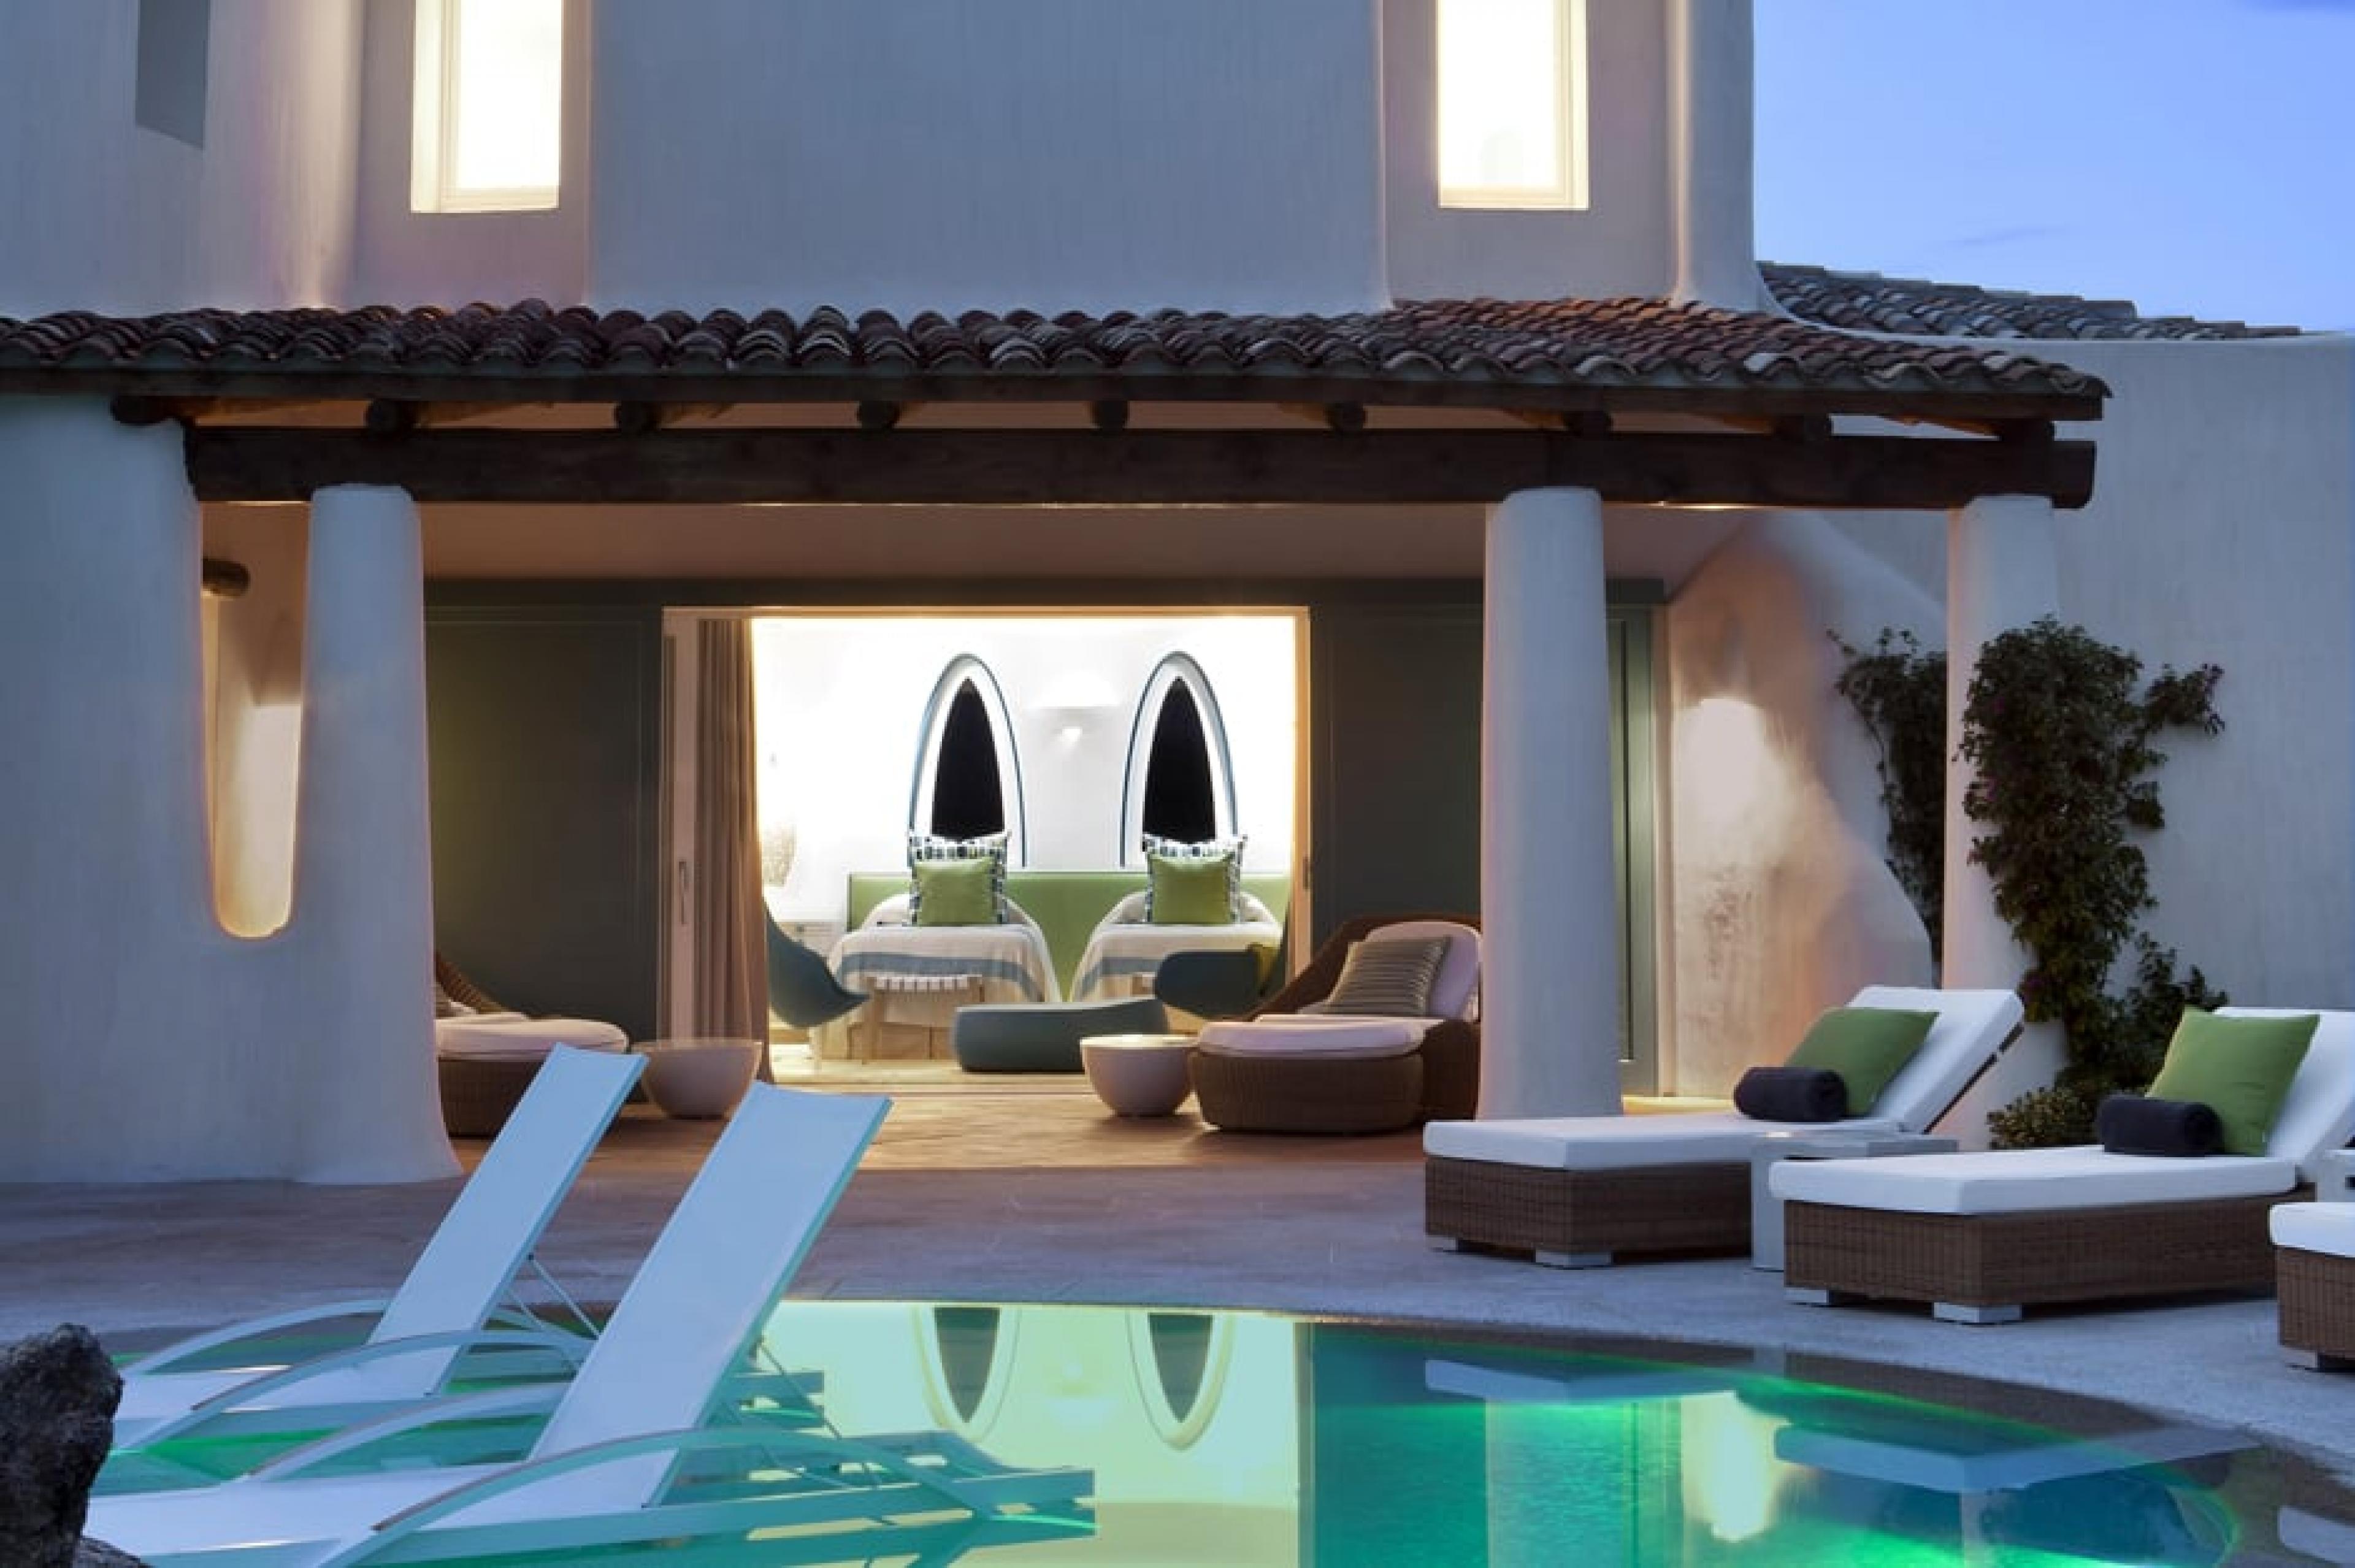 Hotel Romazzino pool in Costa Smeralda in Sardinia, Italy